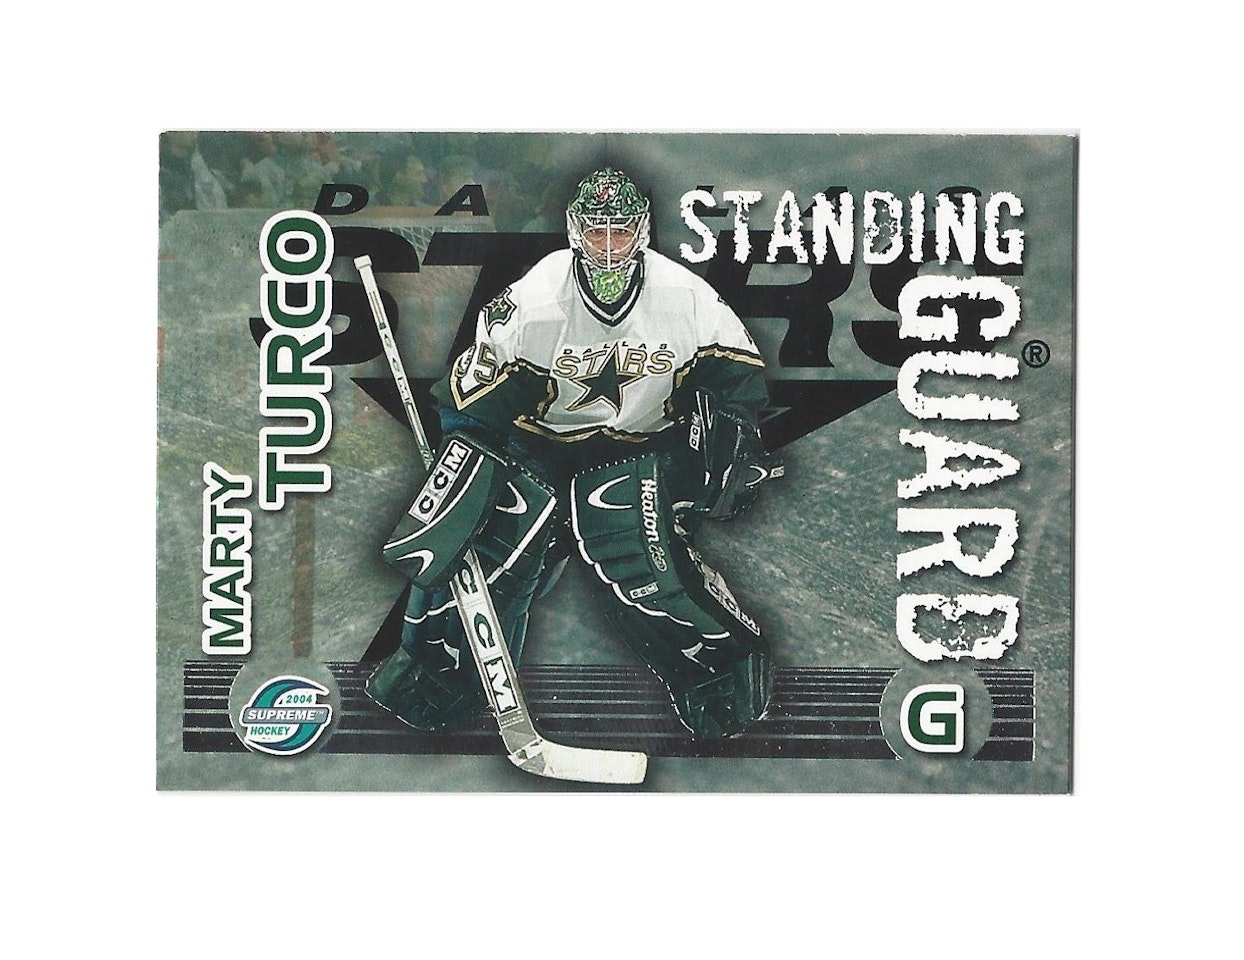 2003-04 Pacific Supreme Standing Guard #5 Marty Turco (15-X42-NHLSTARS)